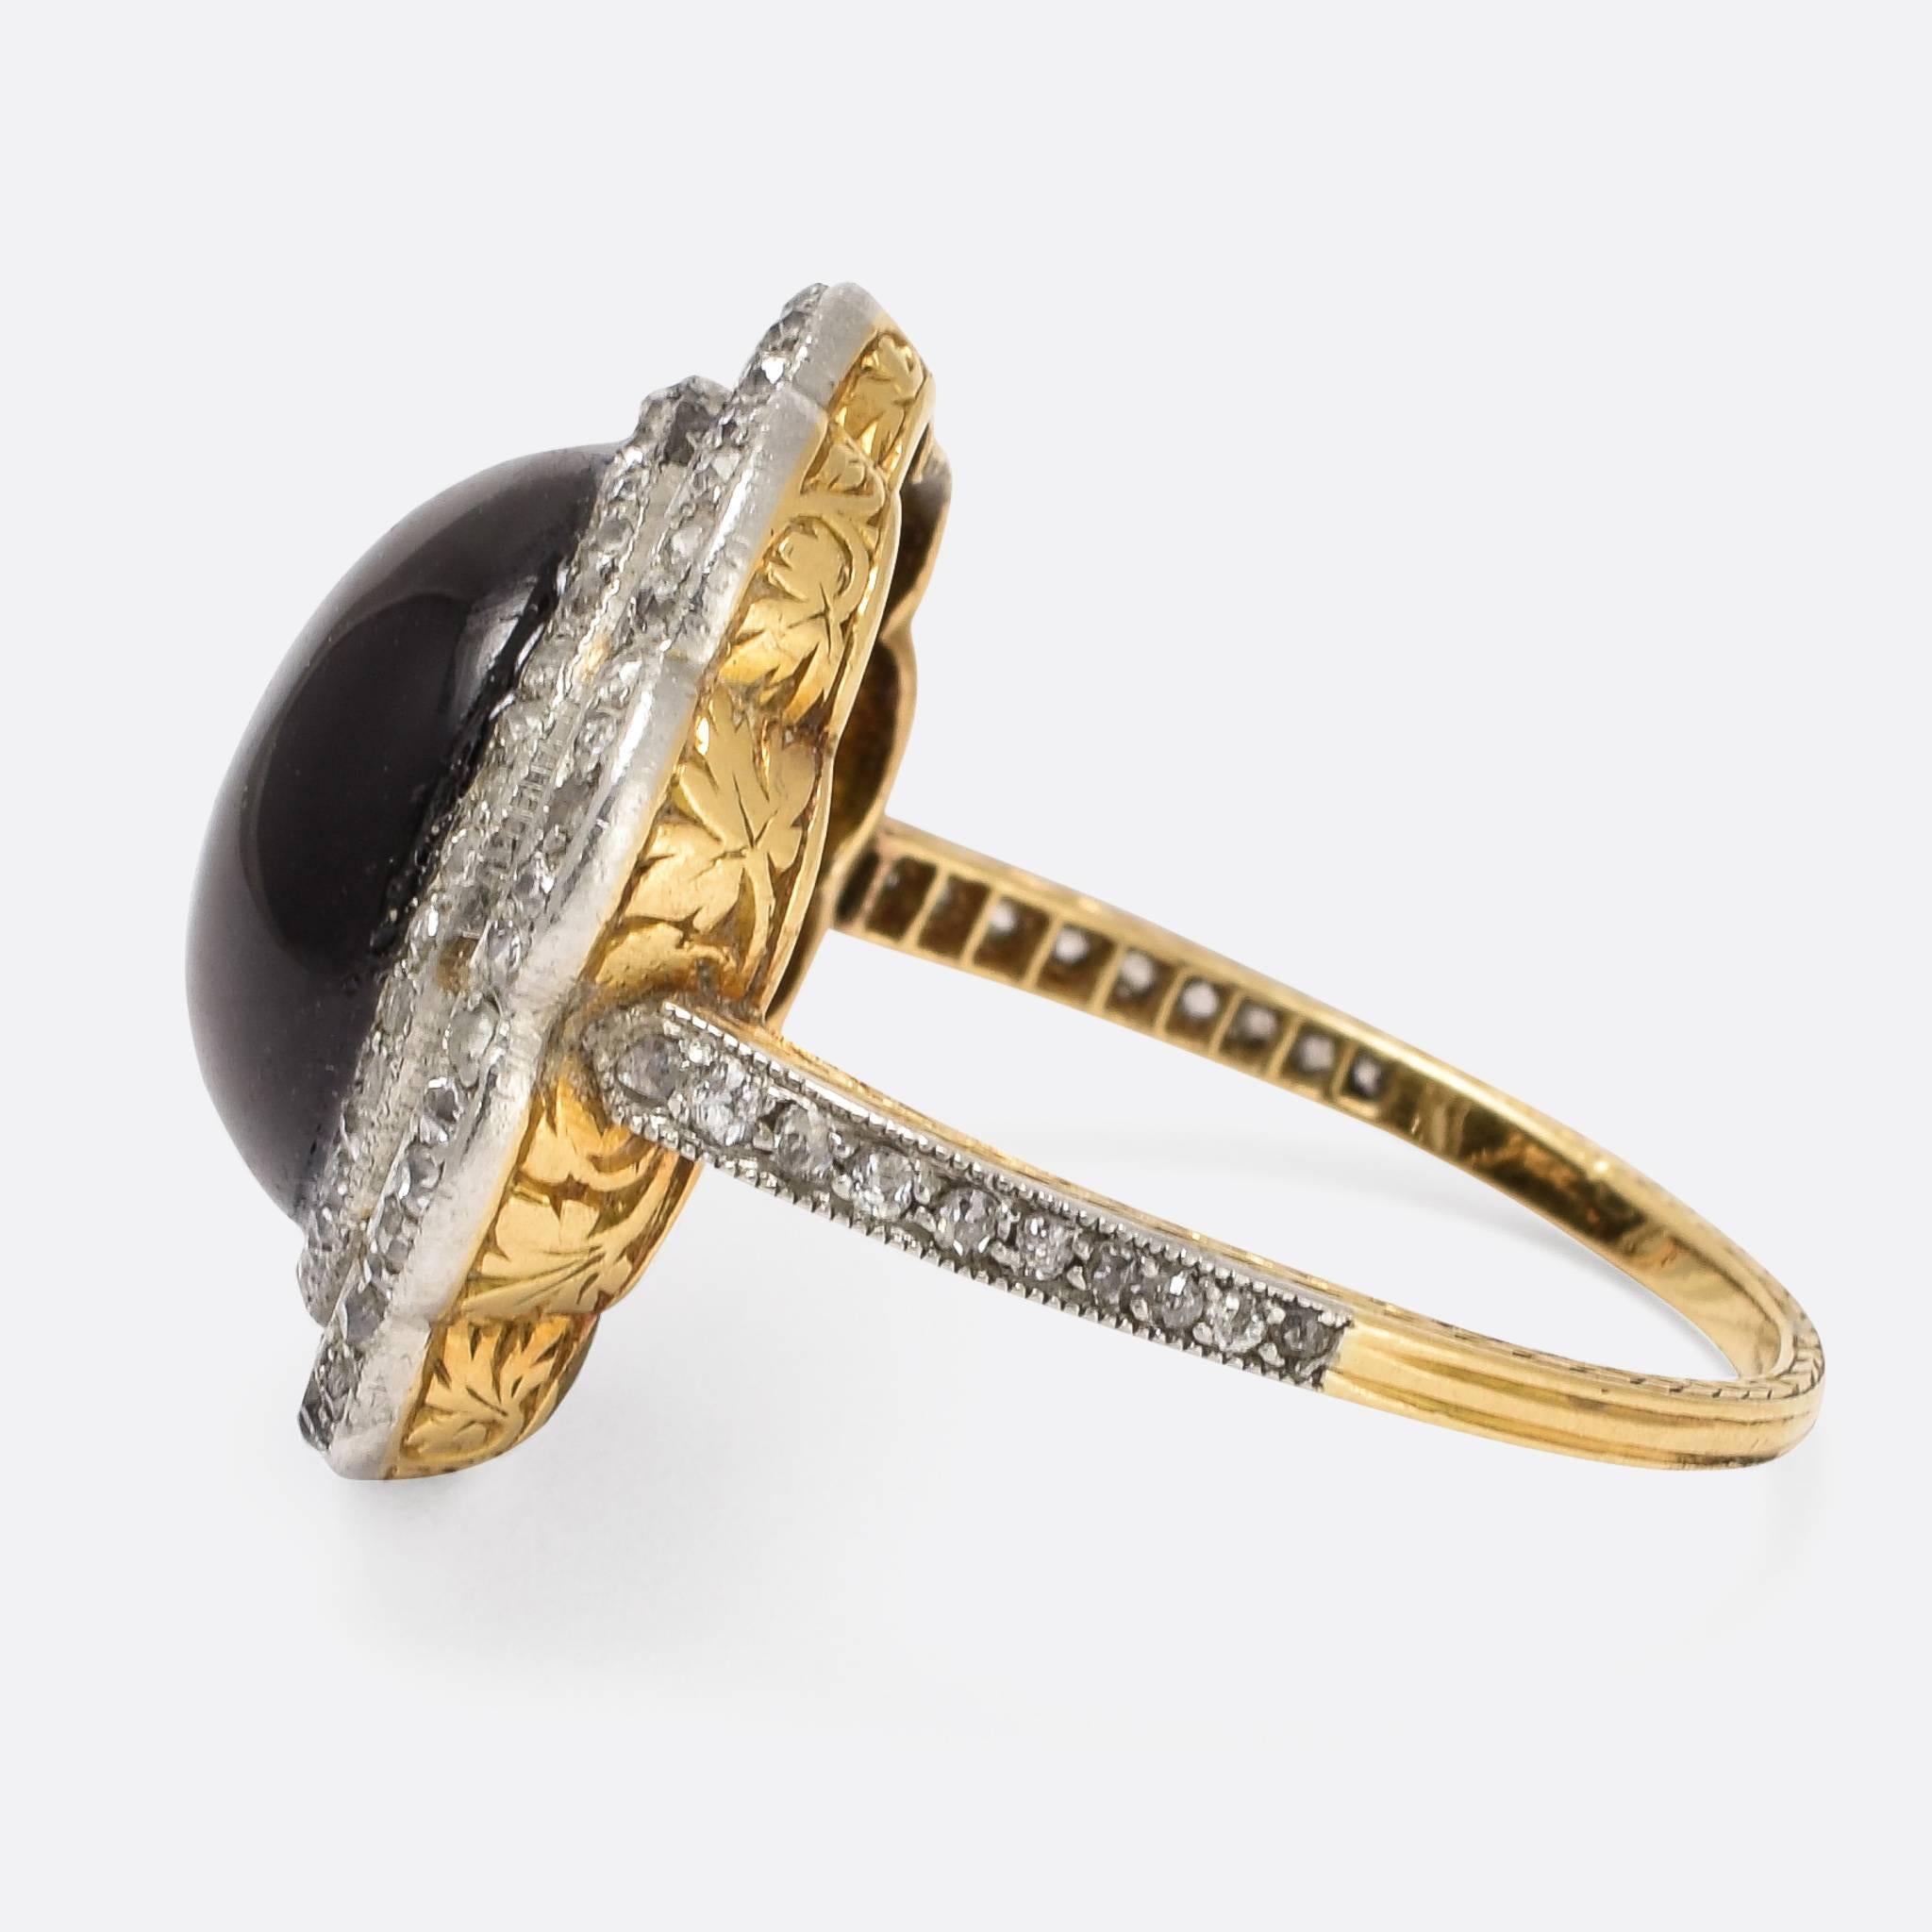 Edwardian French Onyx Diamond Ring